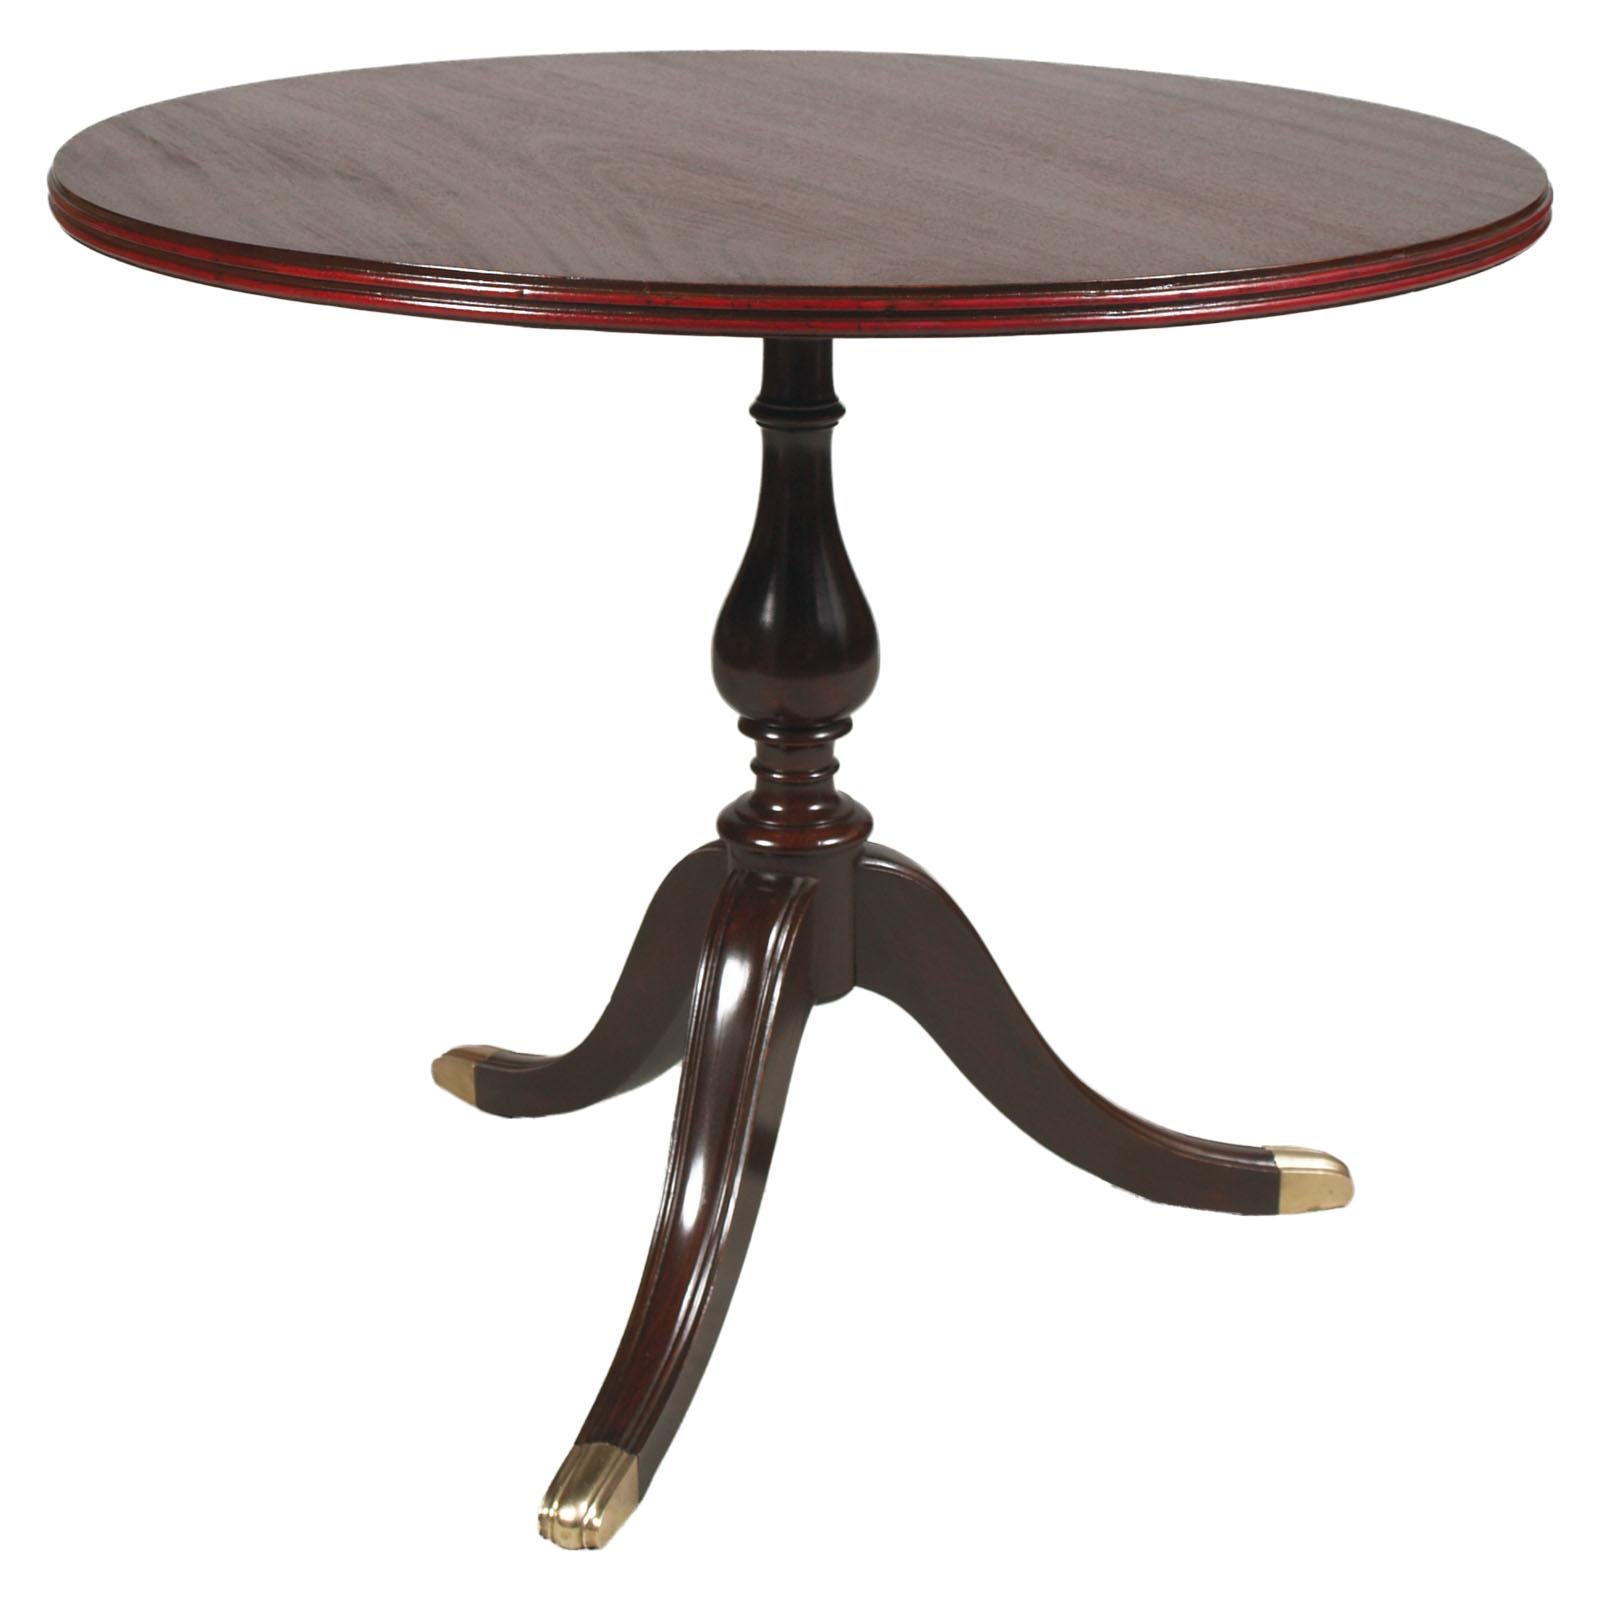 Elegant Mid-Century Modern table of the 